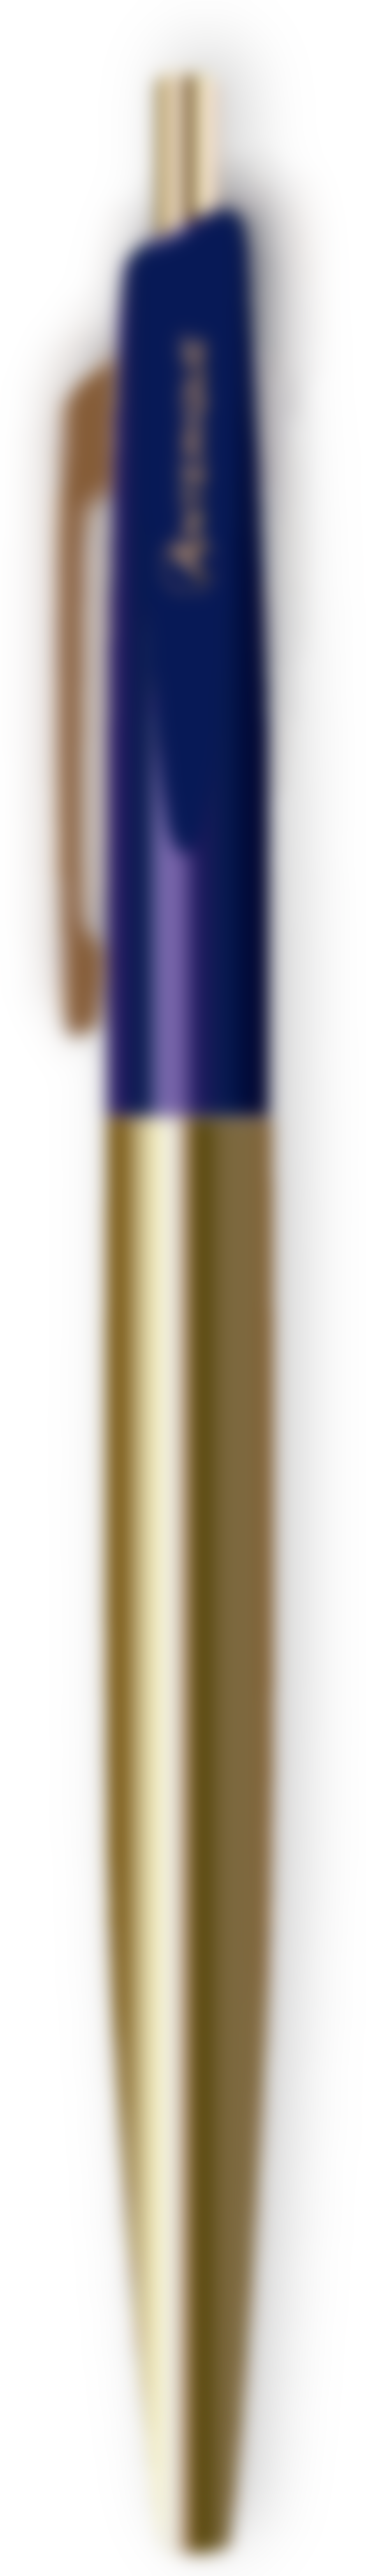 Anterique Bp2 Brass 0.5mm Ballpoint Pen Navy Blue